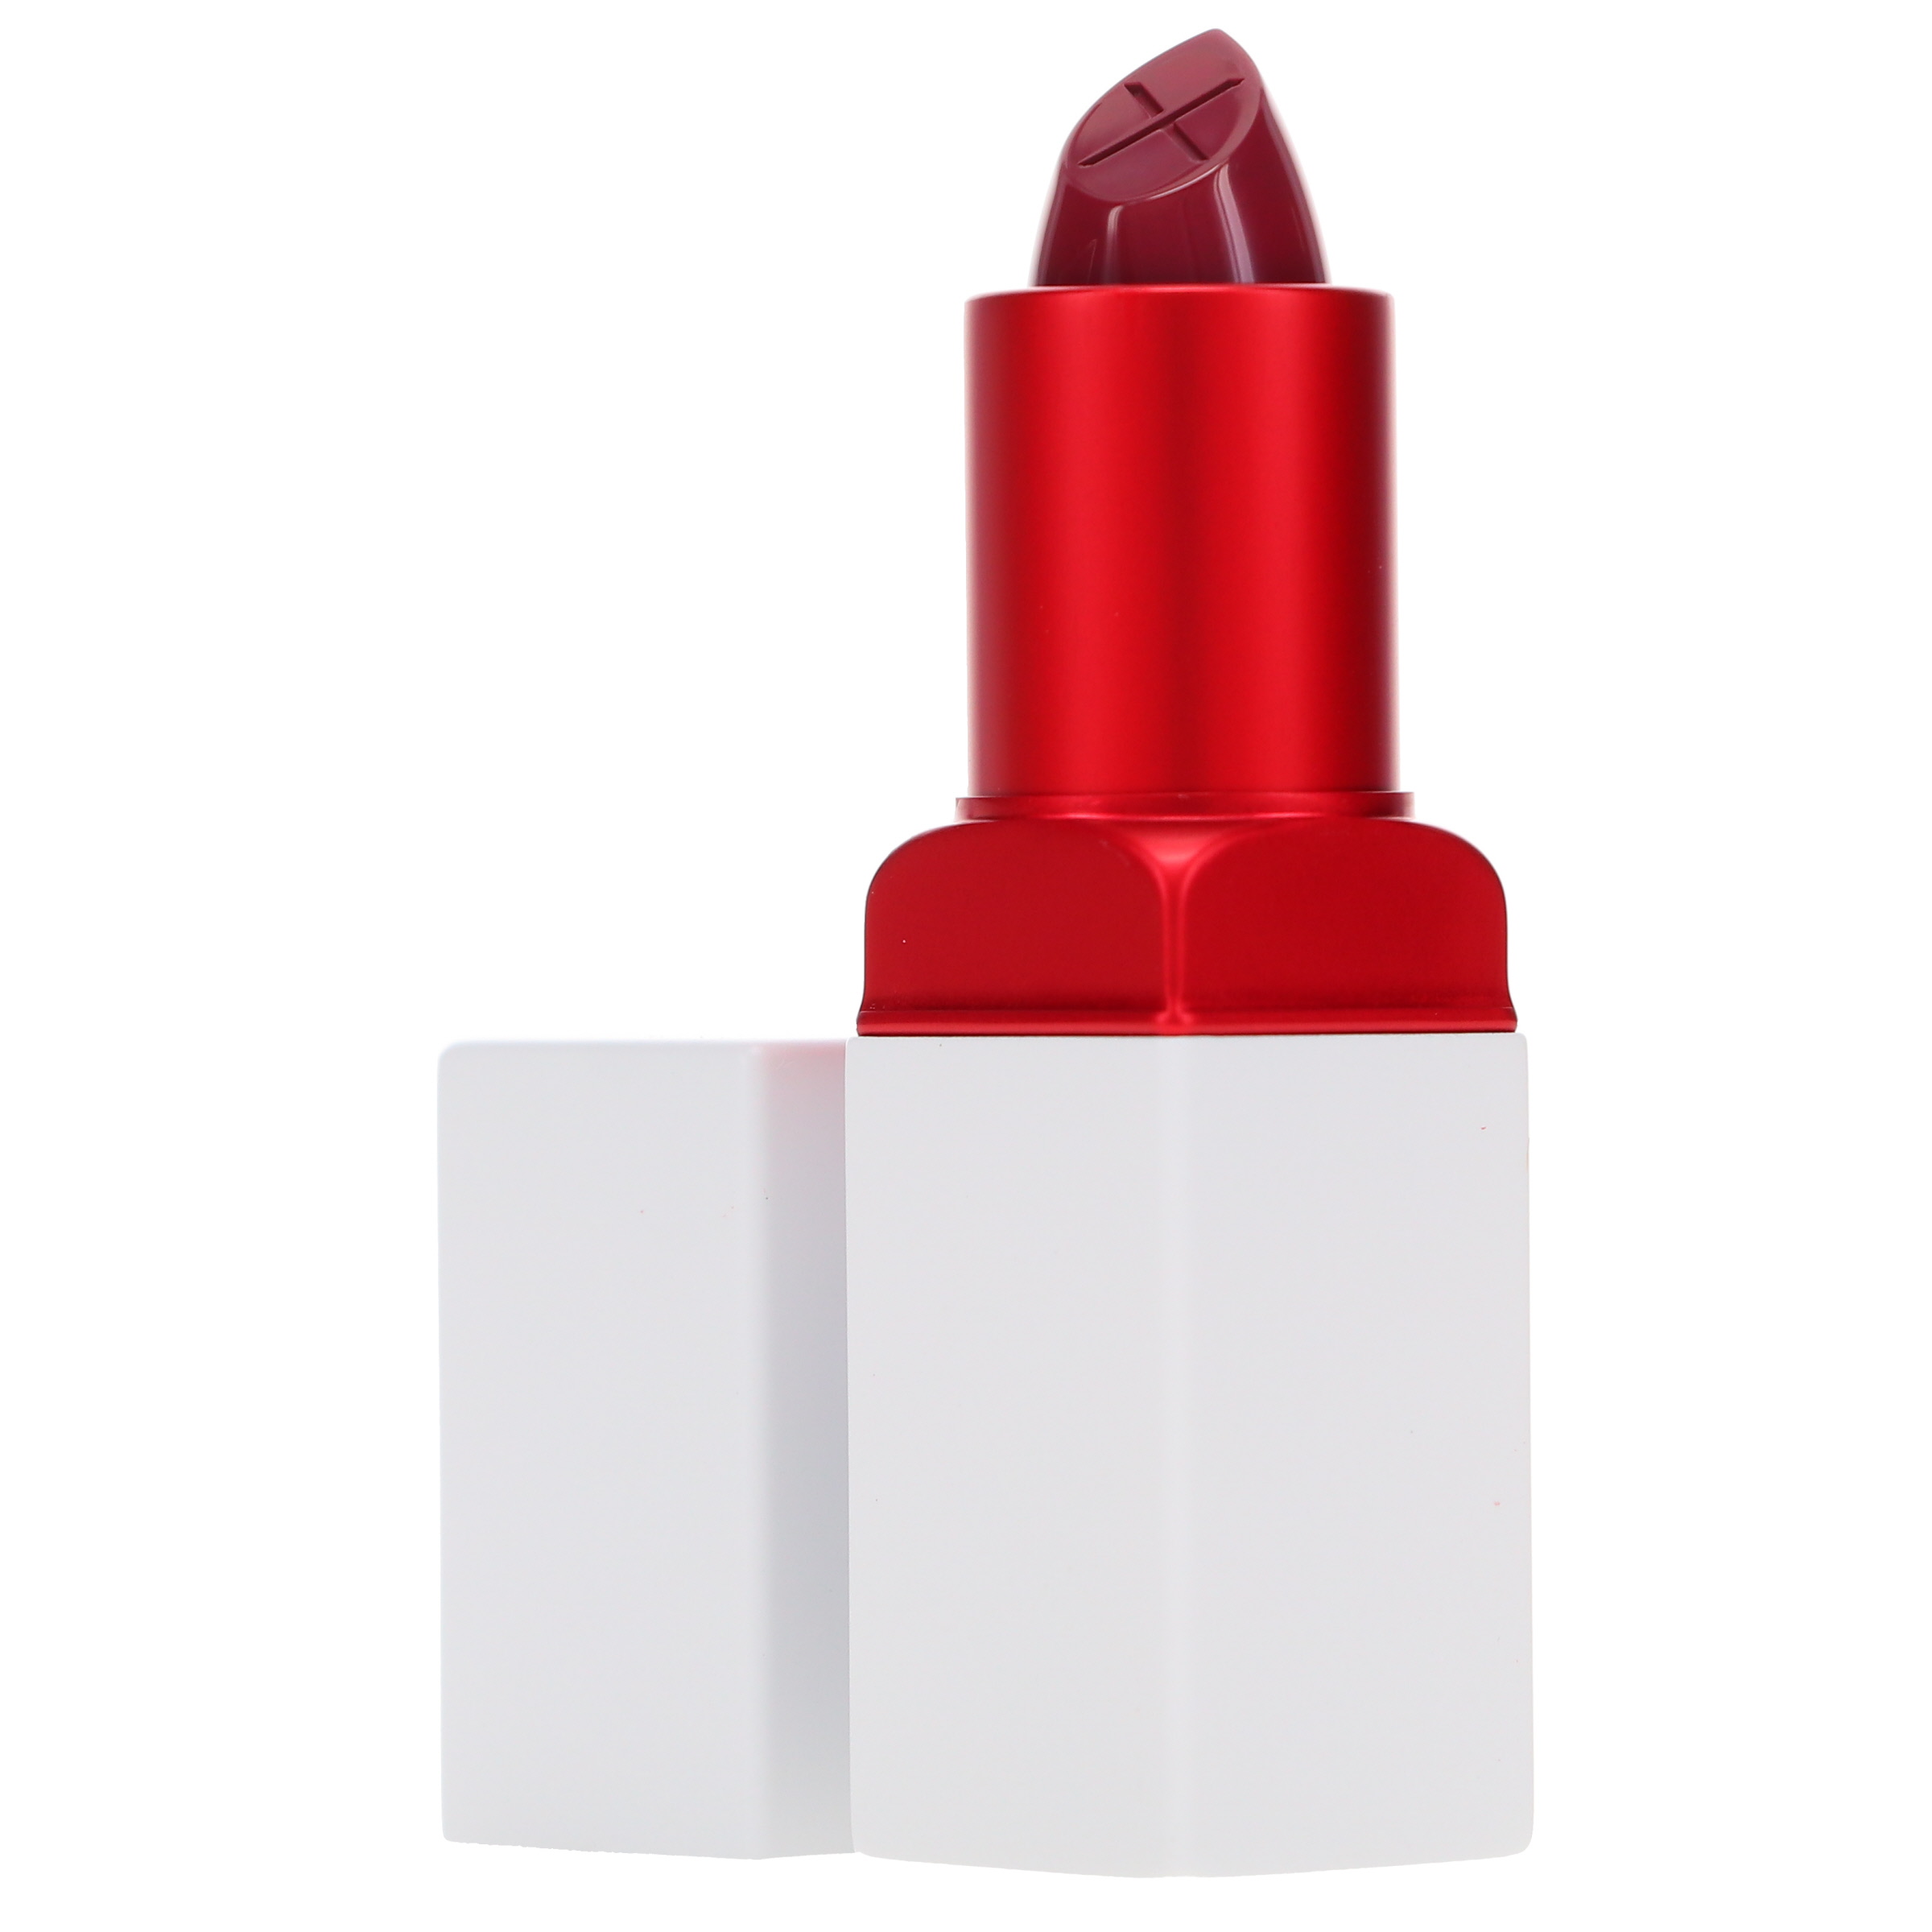 Smashbox Be Legendary Prime & Plush Lipstick .11 oz / 3.4 gm It's A Mood - image 5 of 8